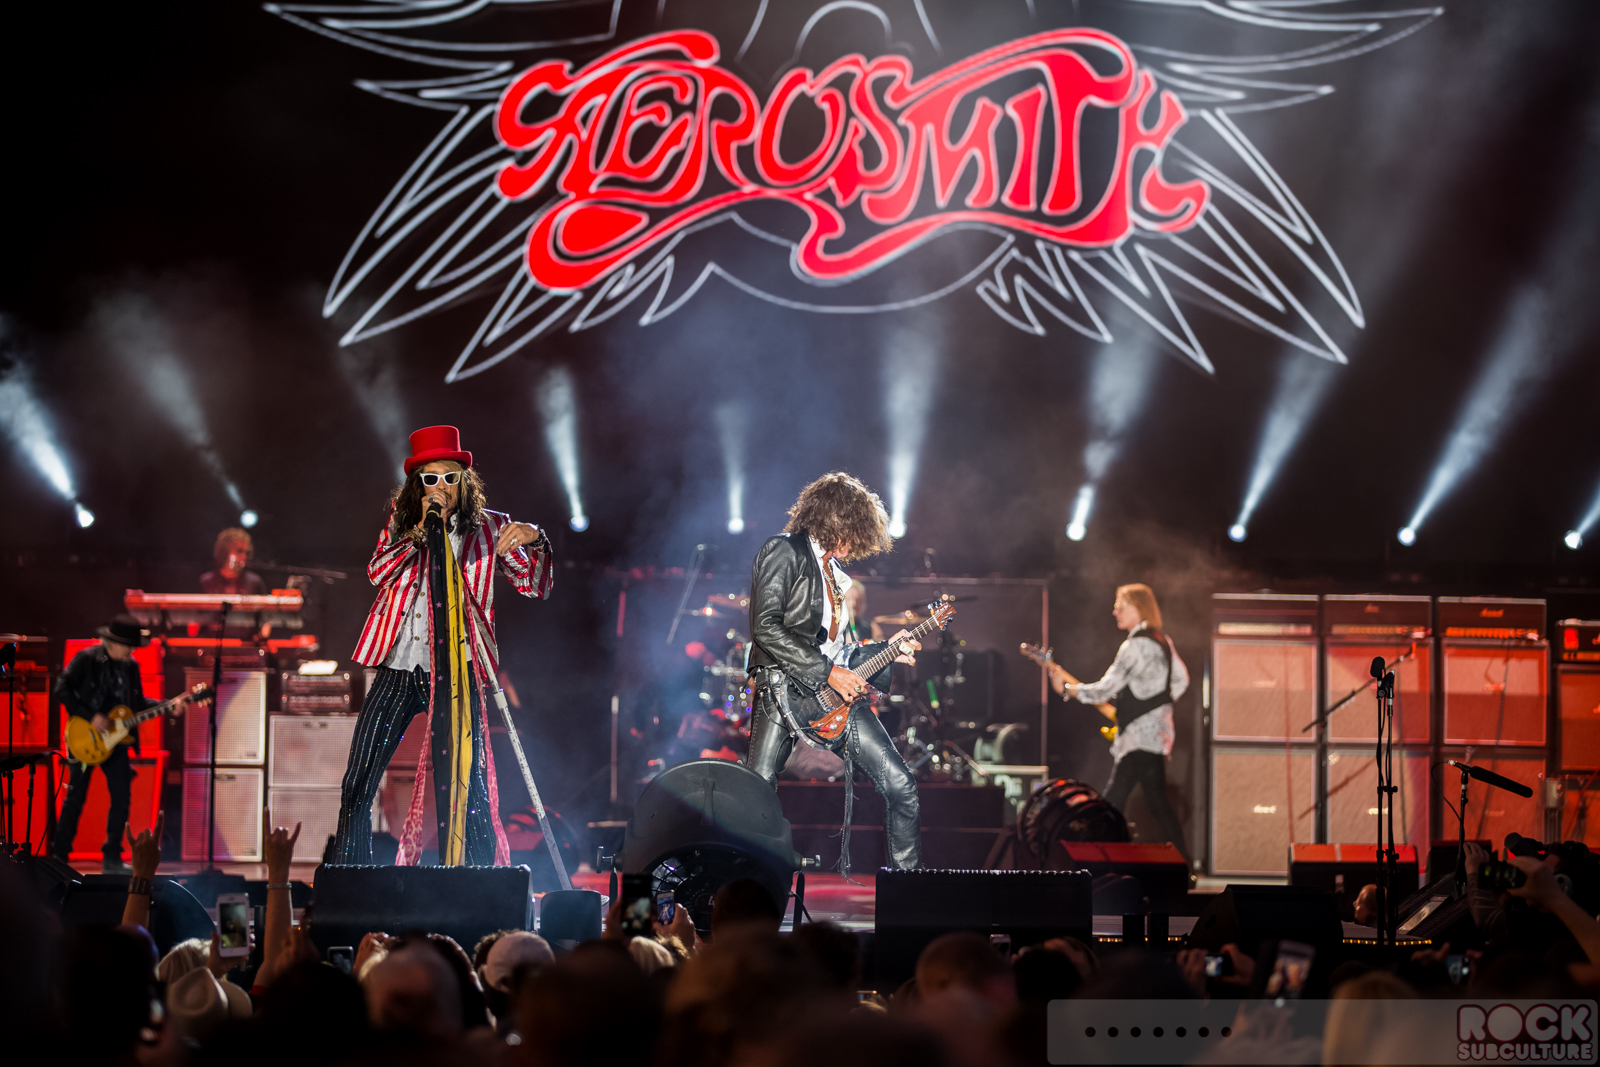 Aerosmith (Blue Army Tour 2015) at Lake Tahoe Outdoor Arena at Harvey’s